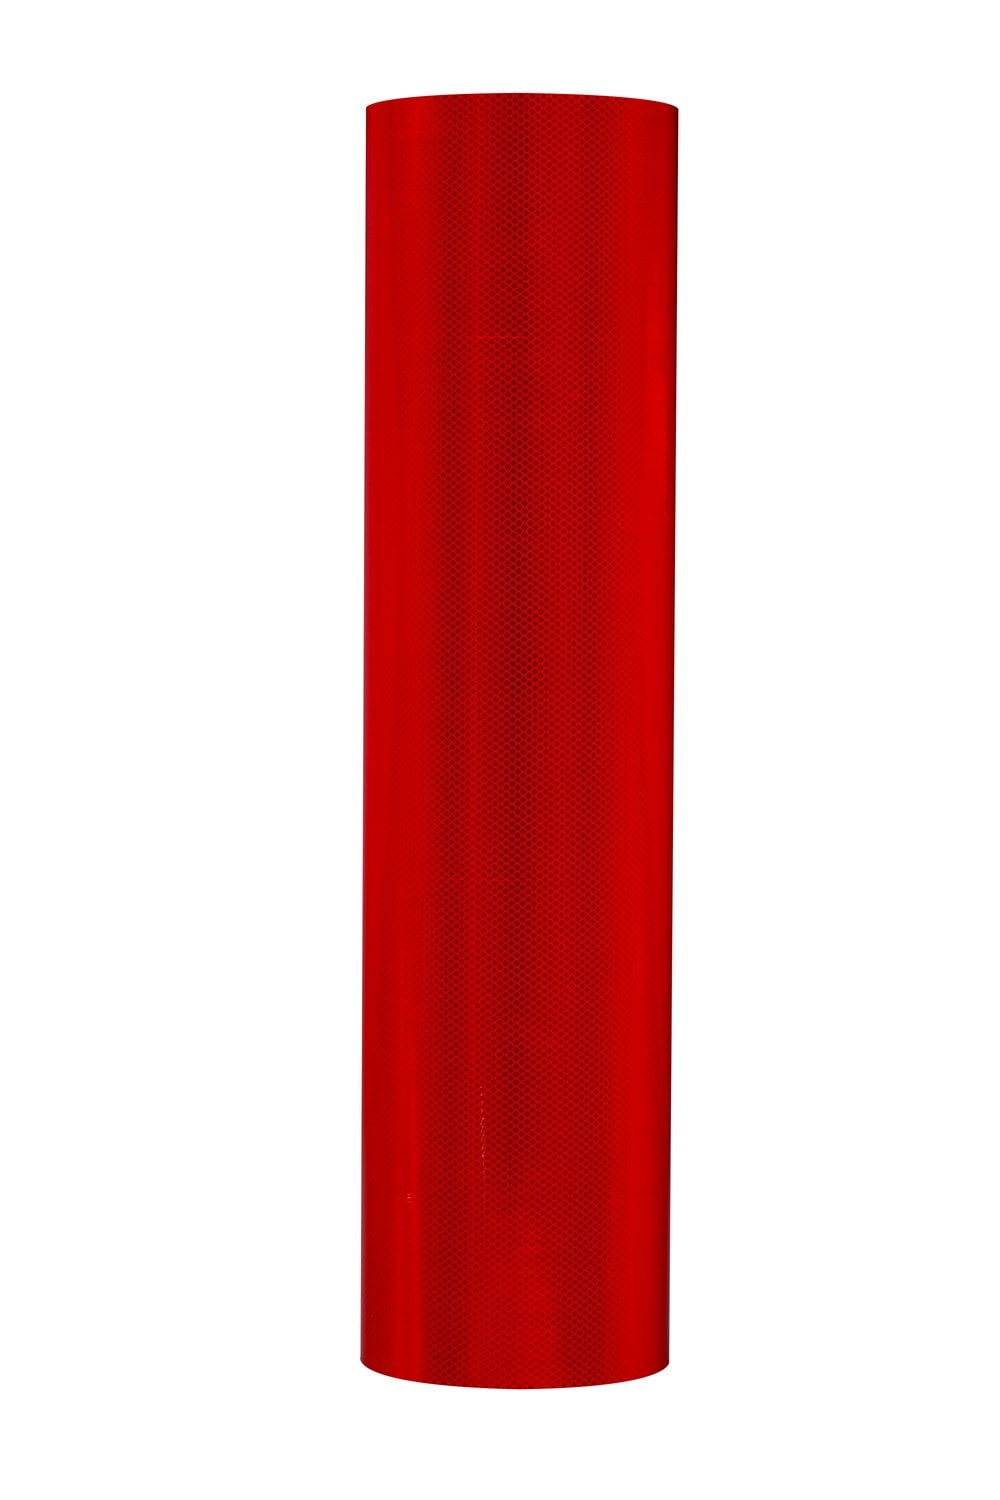 7100008242 - 3M Diamond Grade DG³ Reflective Sheeting 4092 Red, Configurable roll